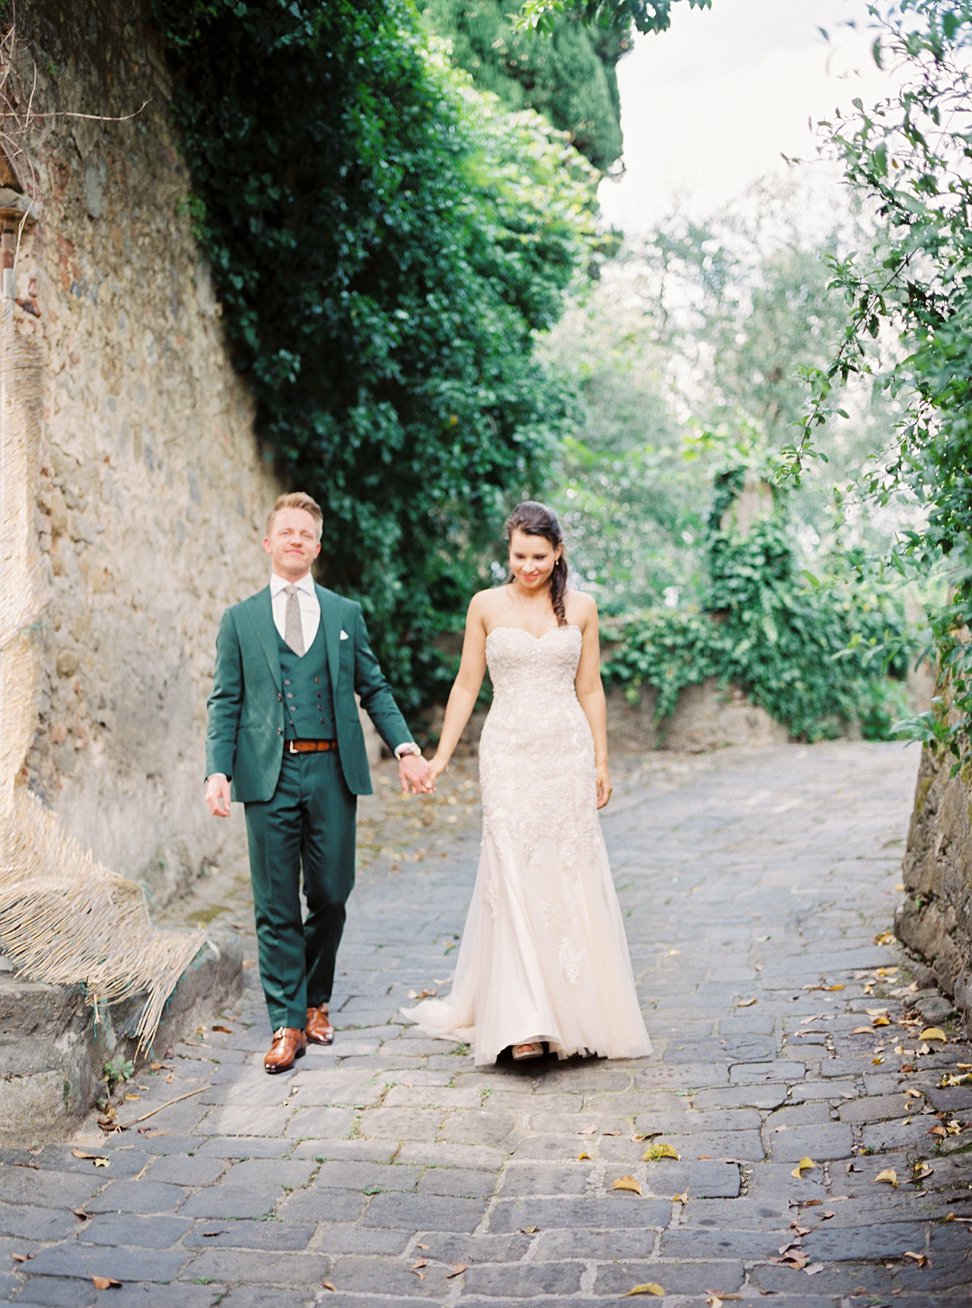 Amanda-Drost-photography-wedding-italy-Villa-sermolli-tuscany_0003.jpg